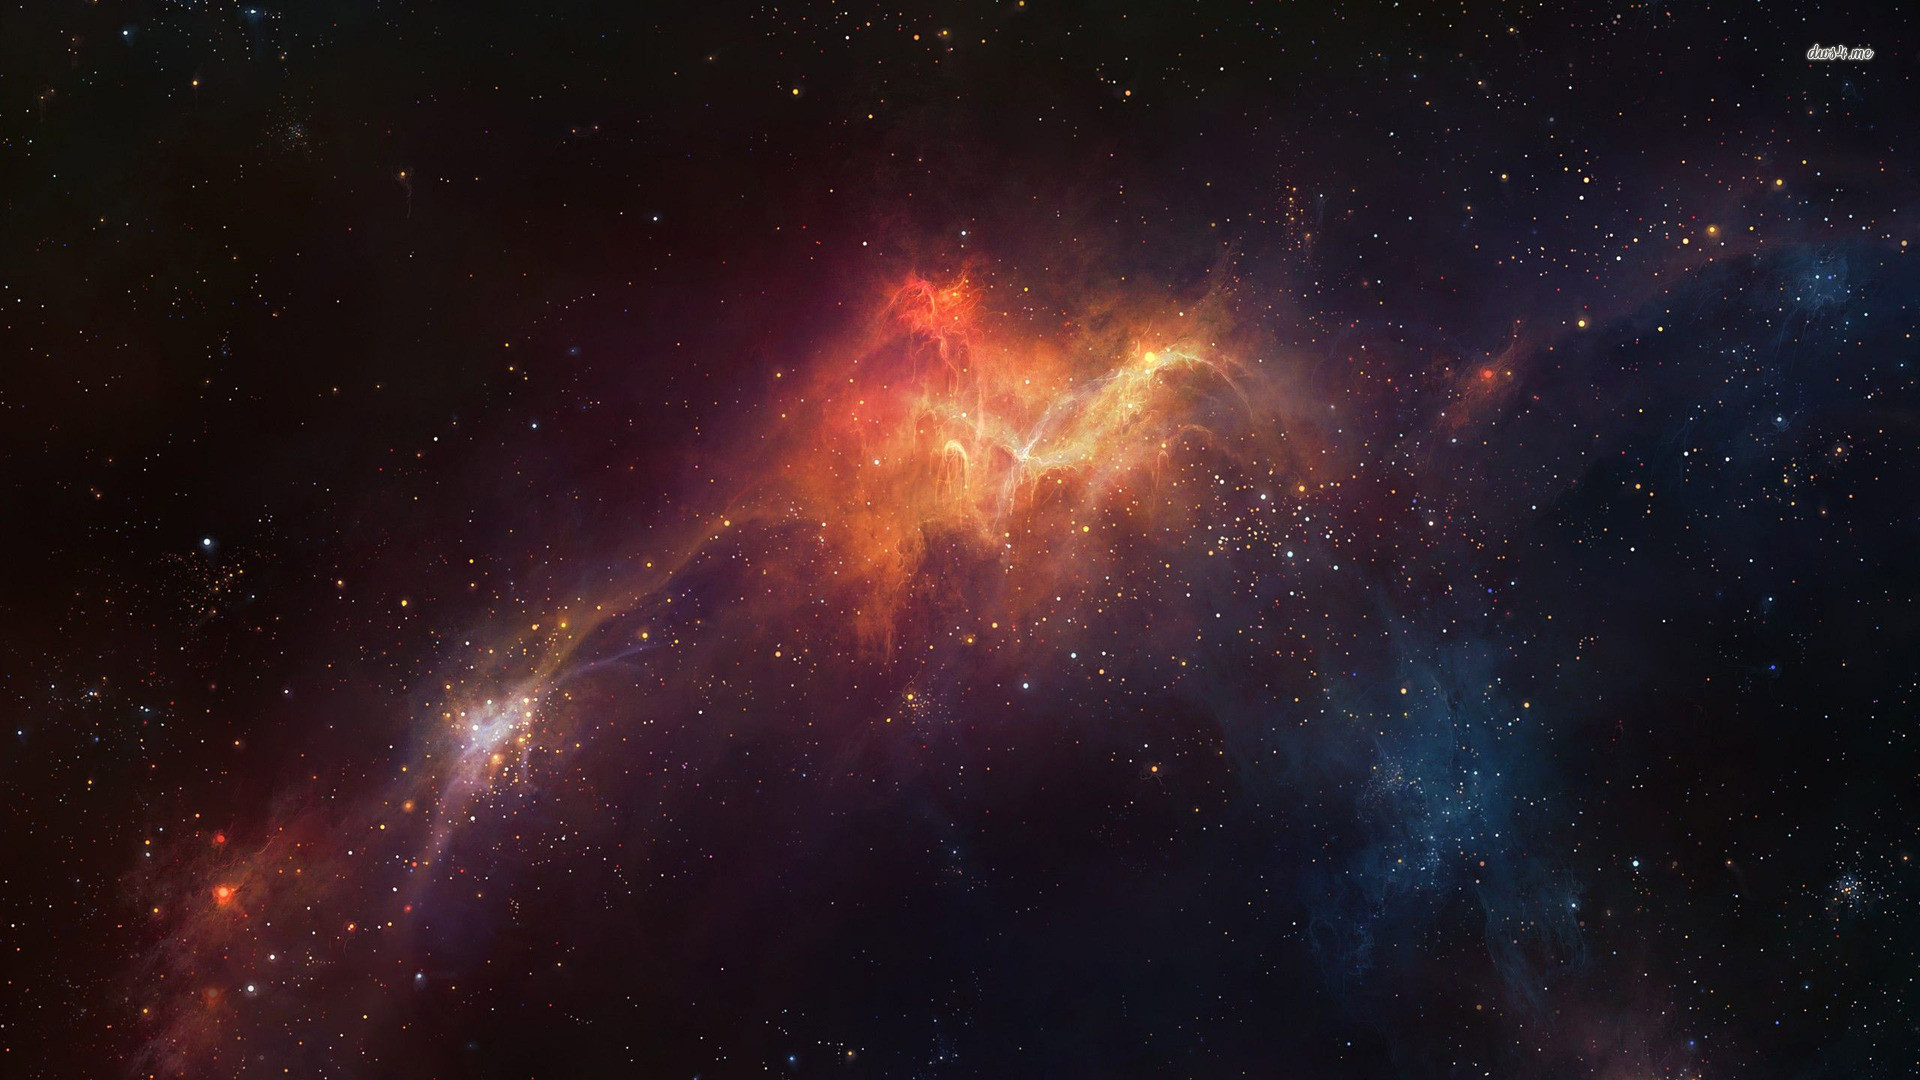 hd galaxy wallpaper – Google Search | Space | Pinterest | Hd galaxy  wallpaper and Wallpaper